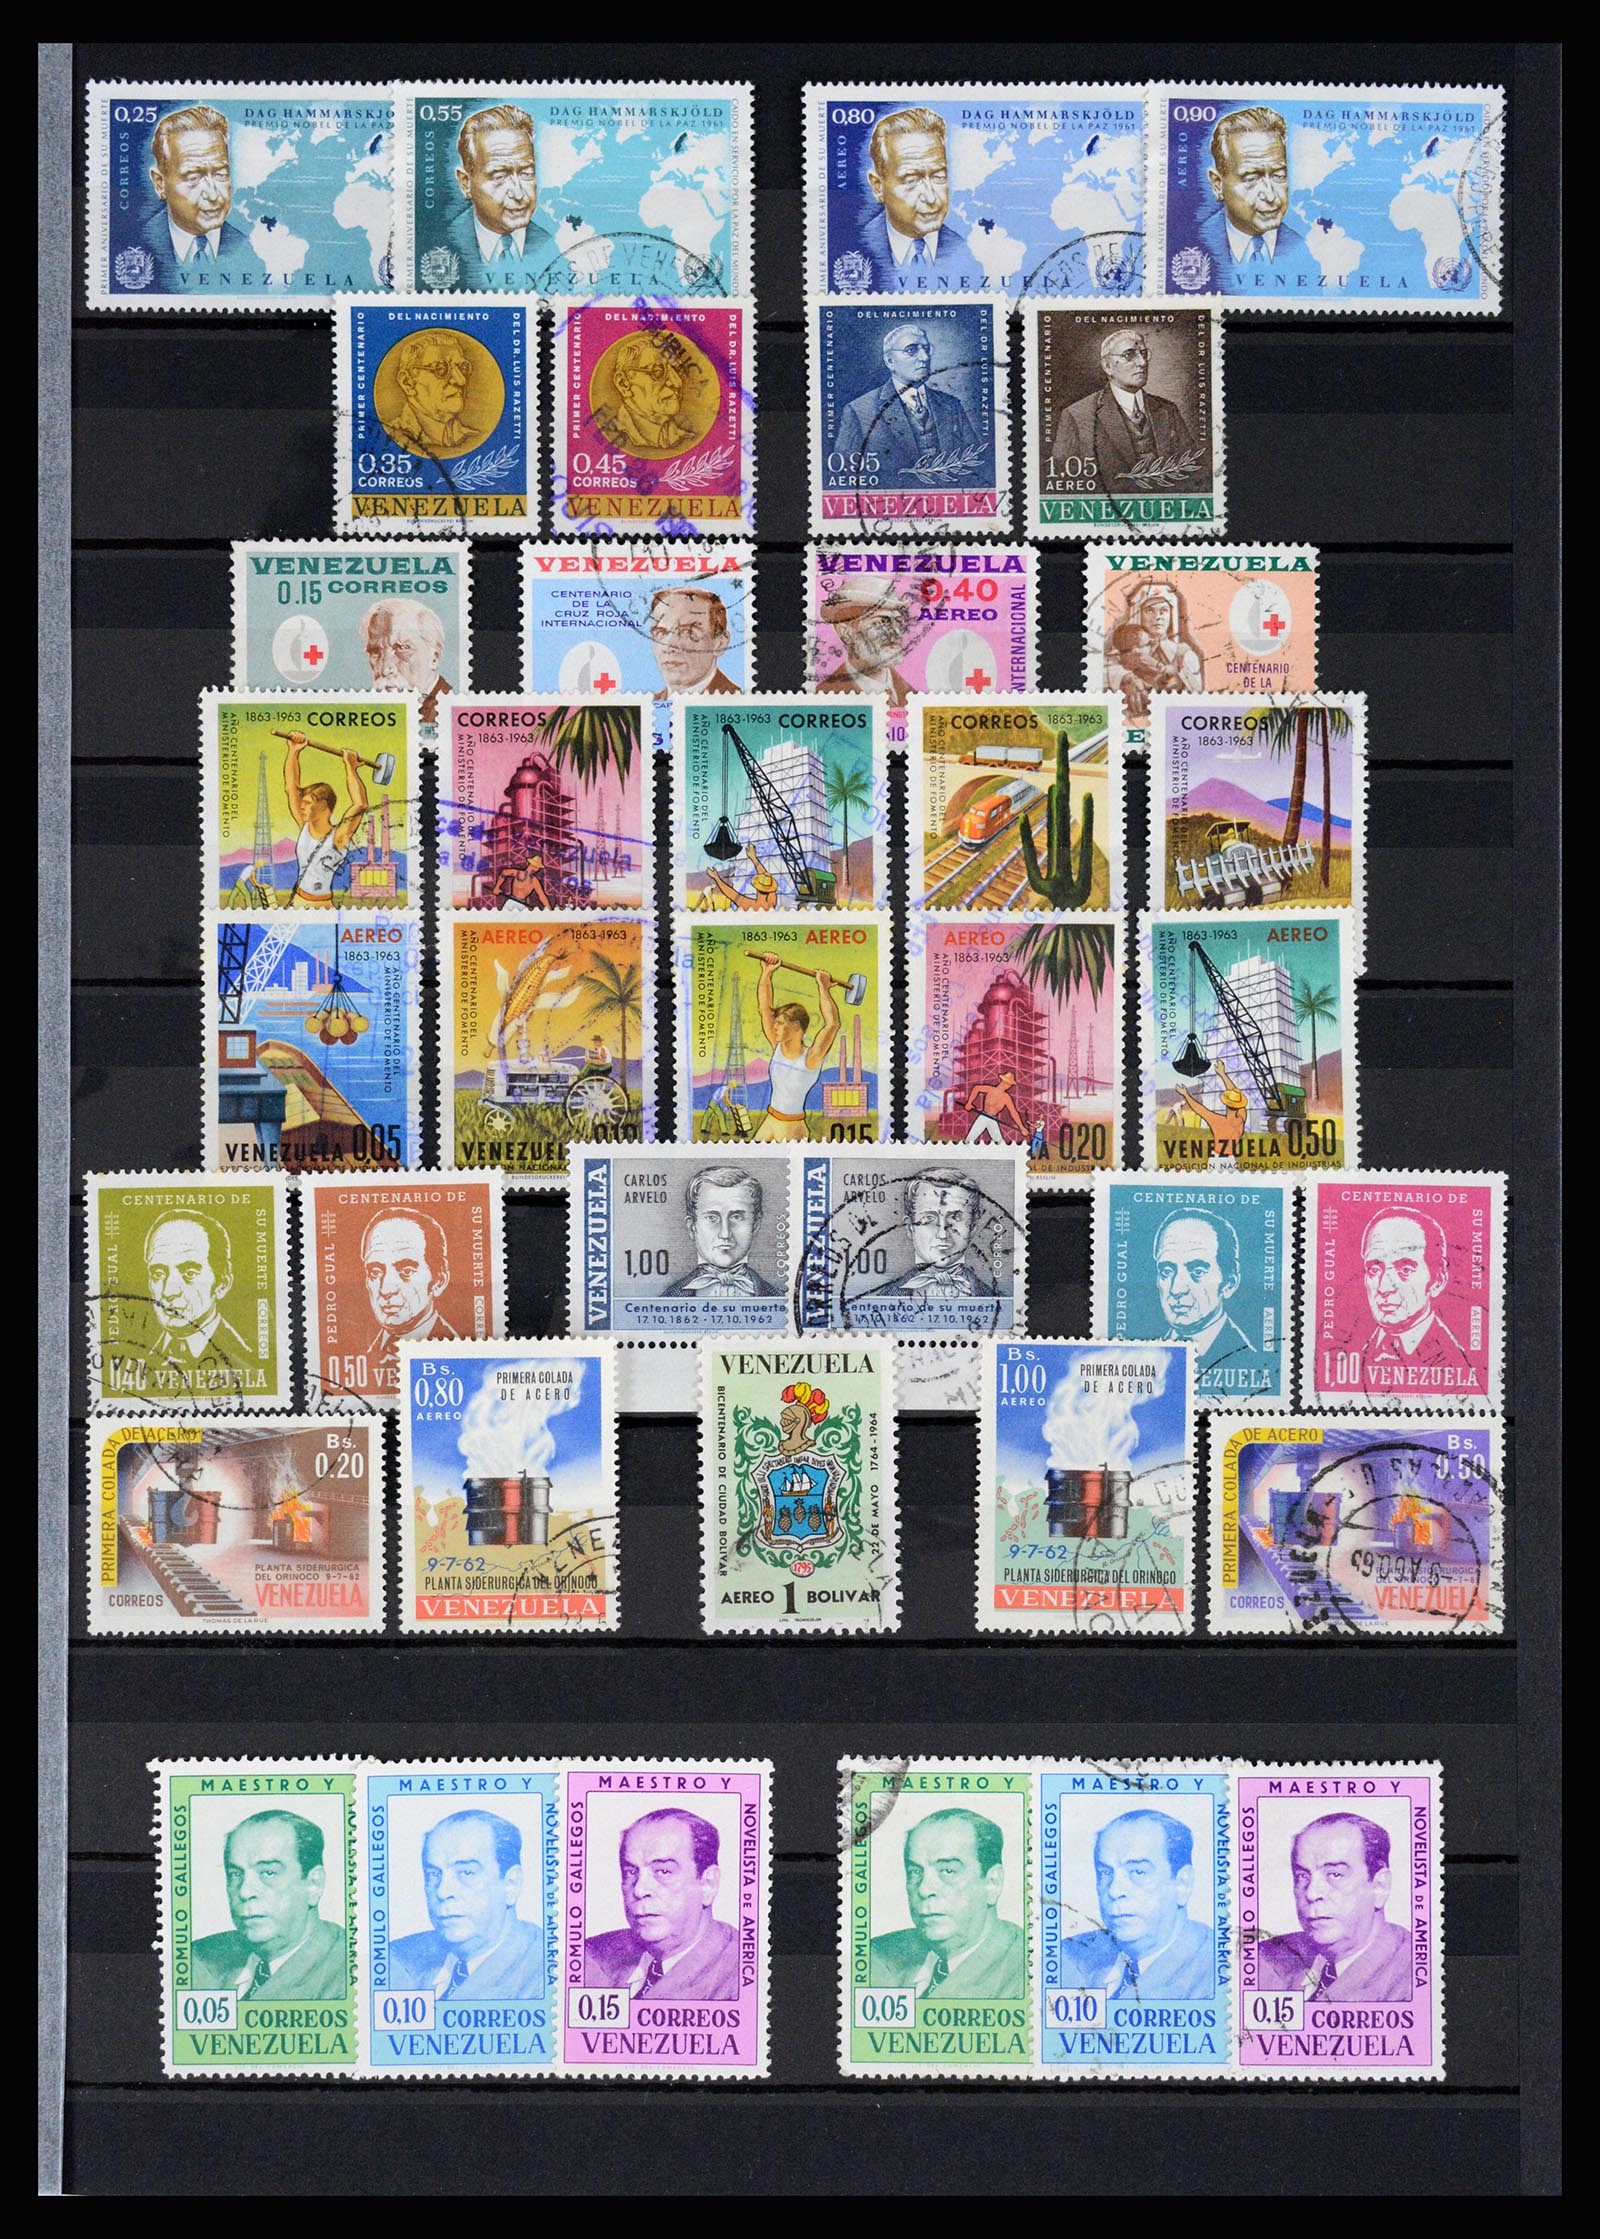 36987 040 - Stamp collection 36987 Venezuela 1860-1995.